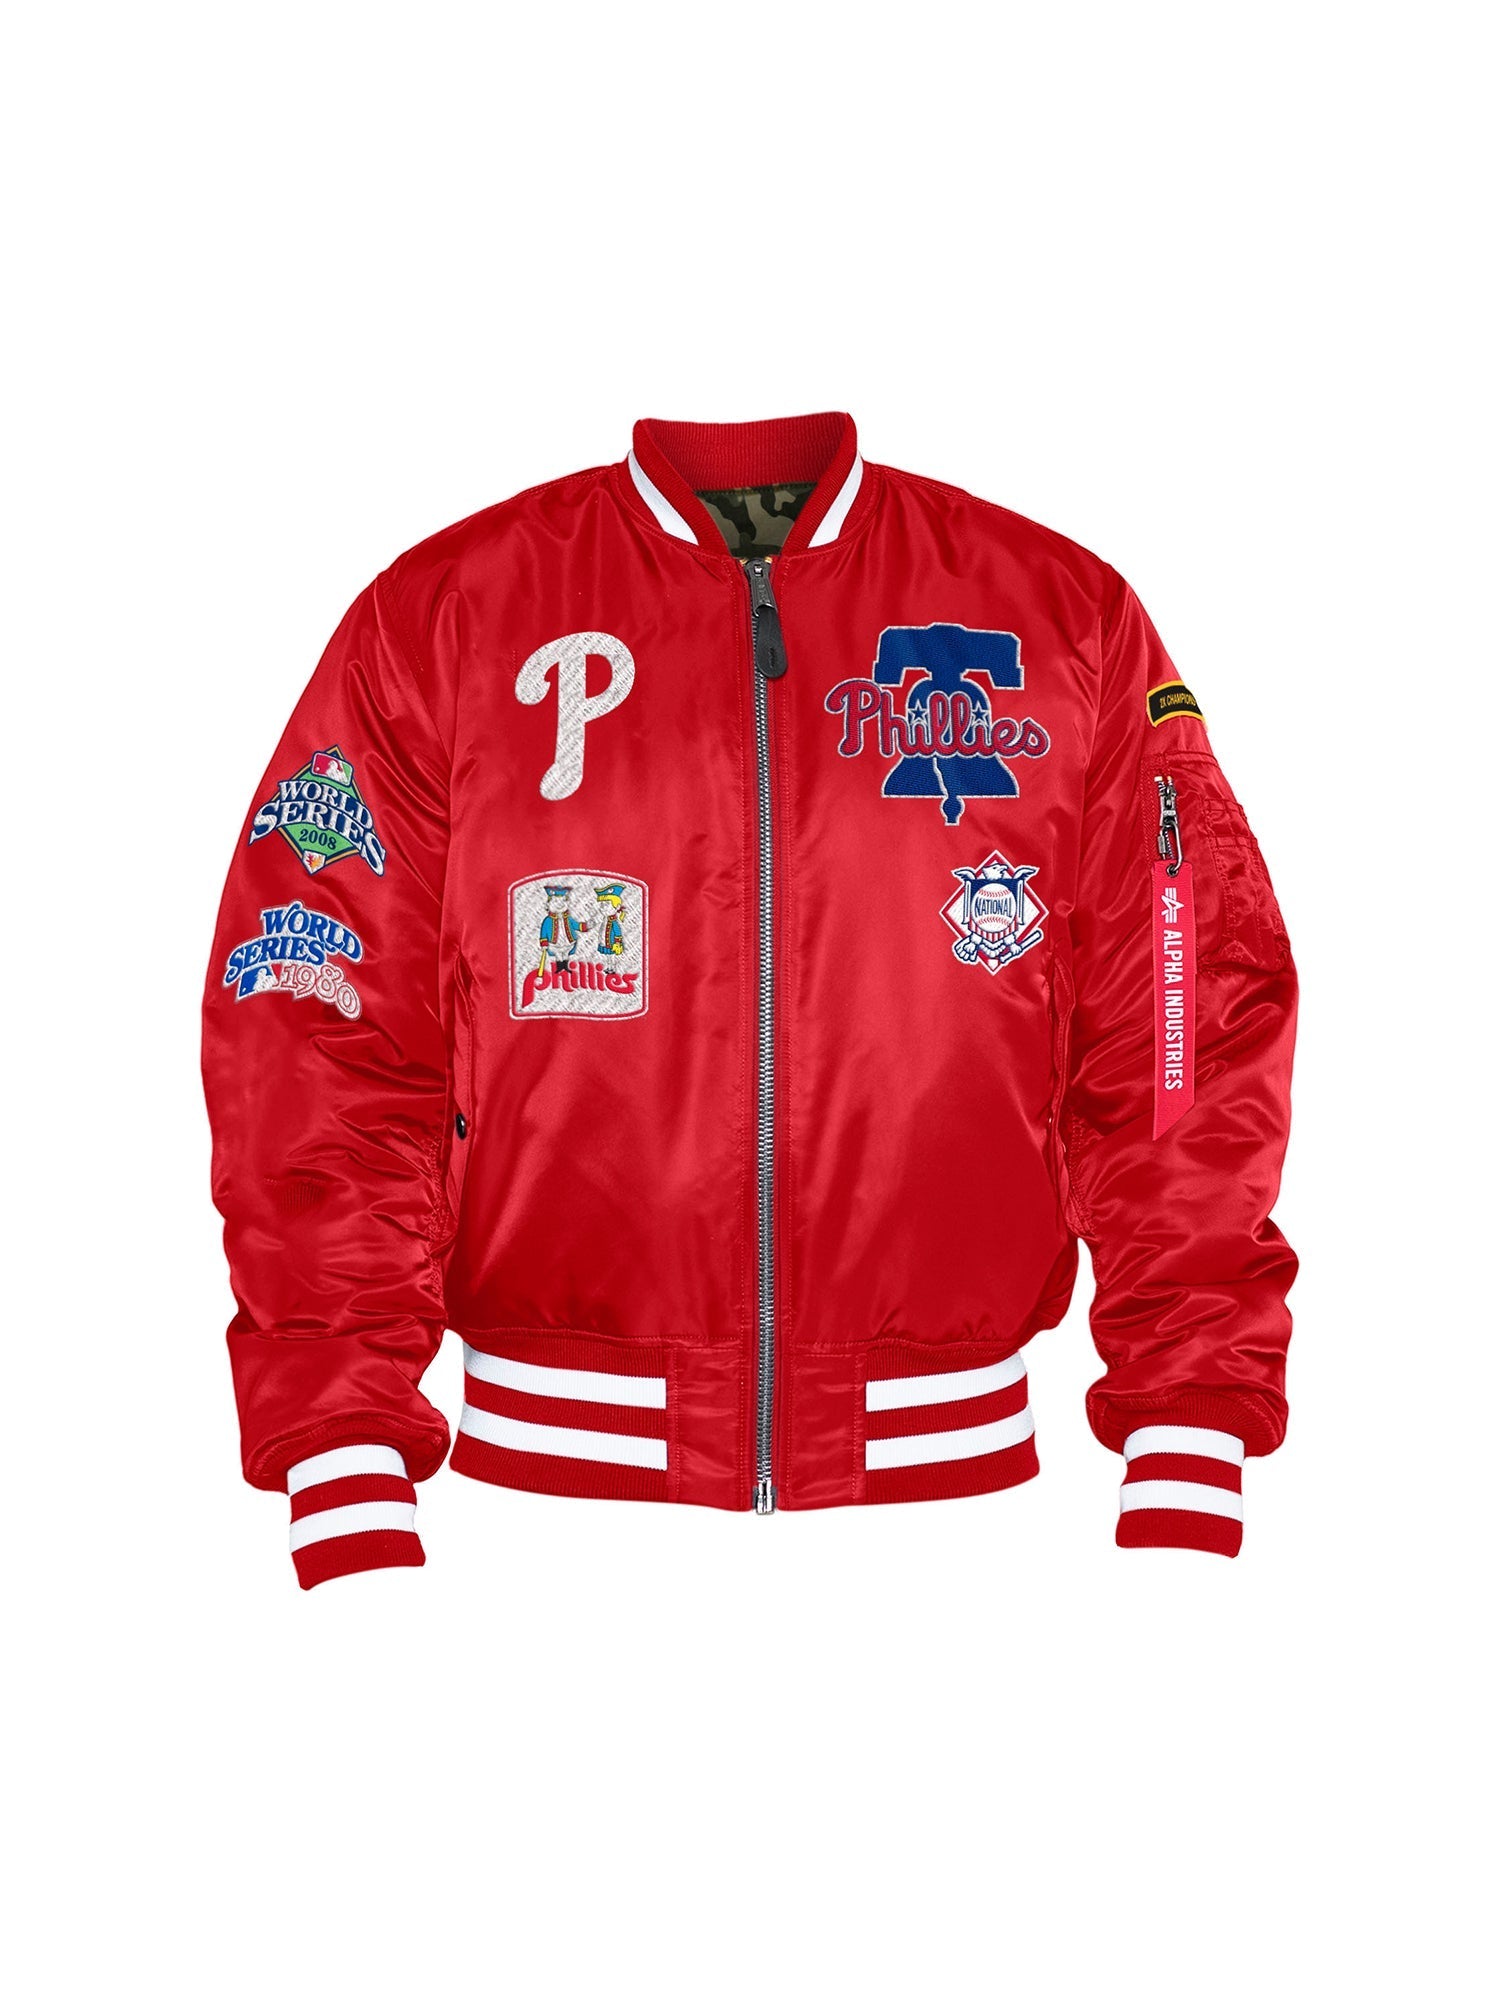 Men's JH Design Black/Red Philadelphia Phillies Wool Reversible Jacket